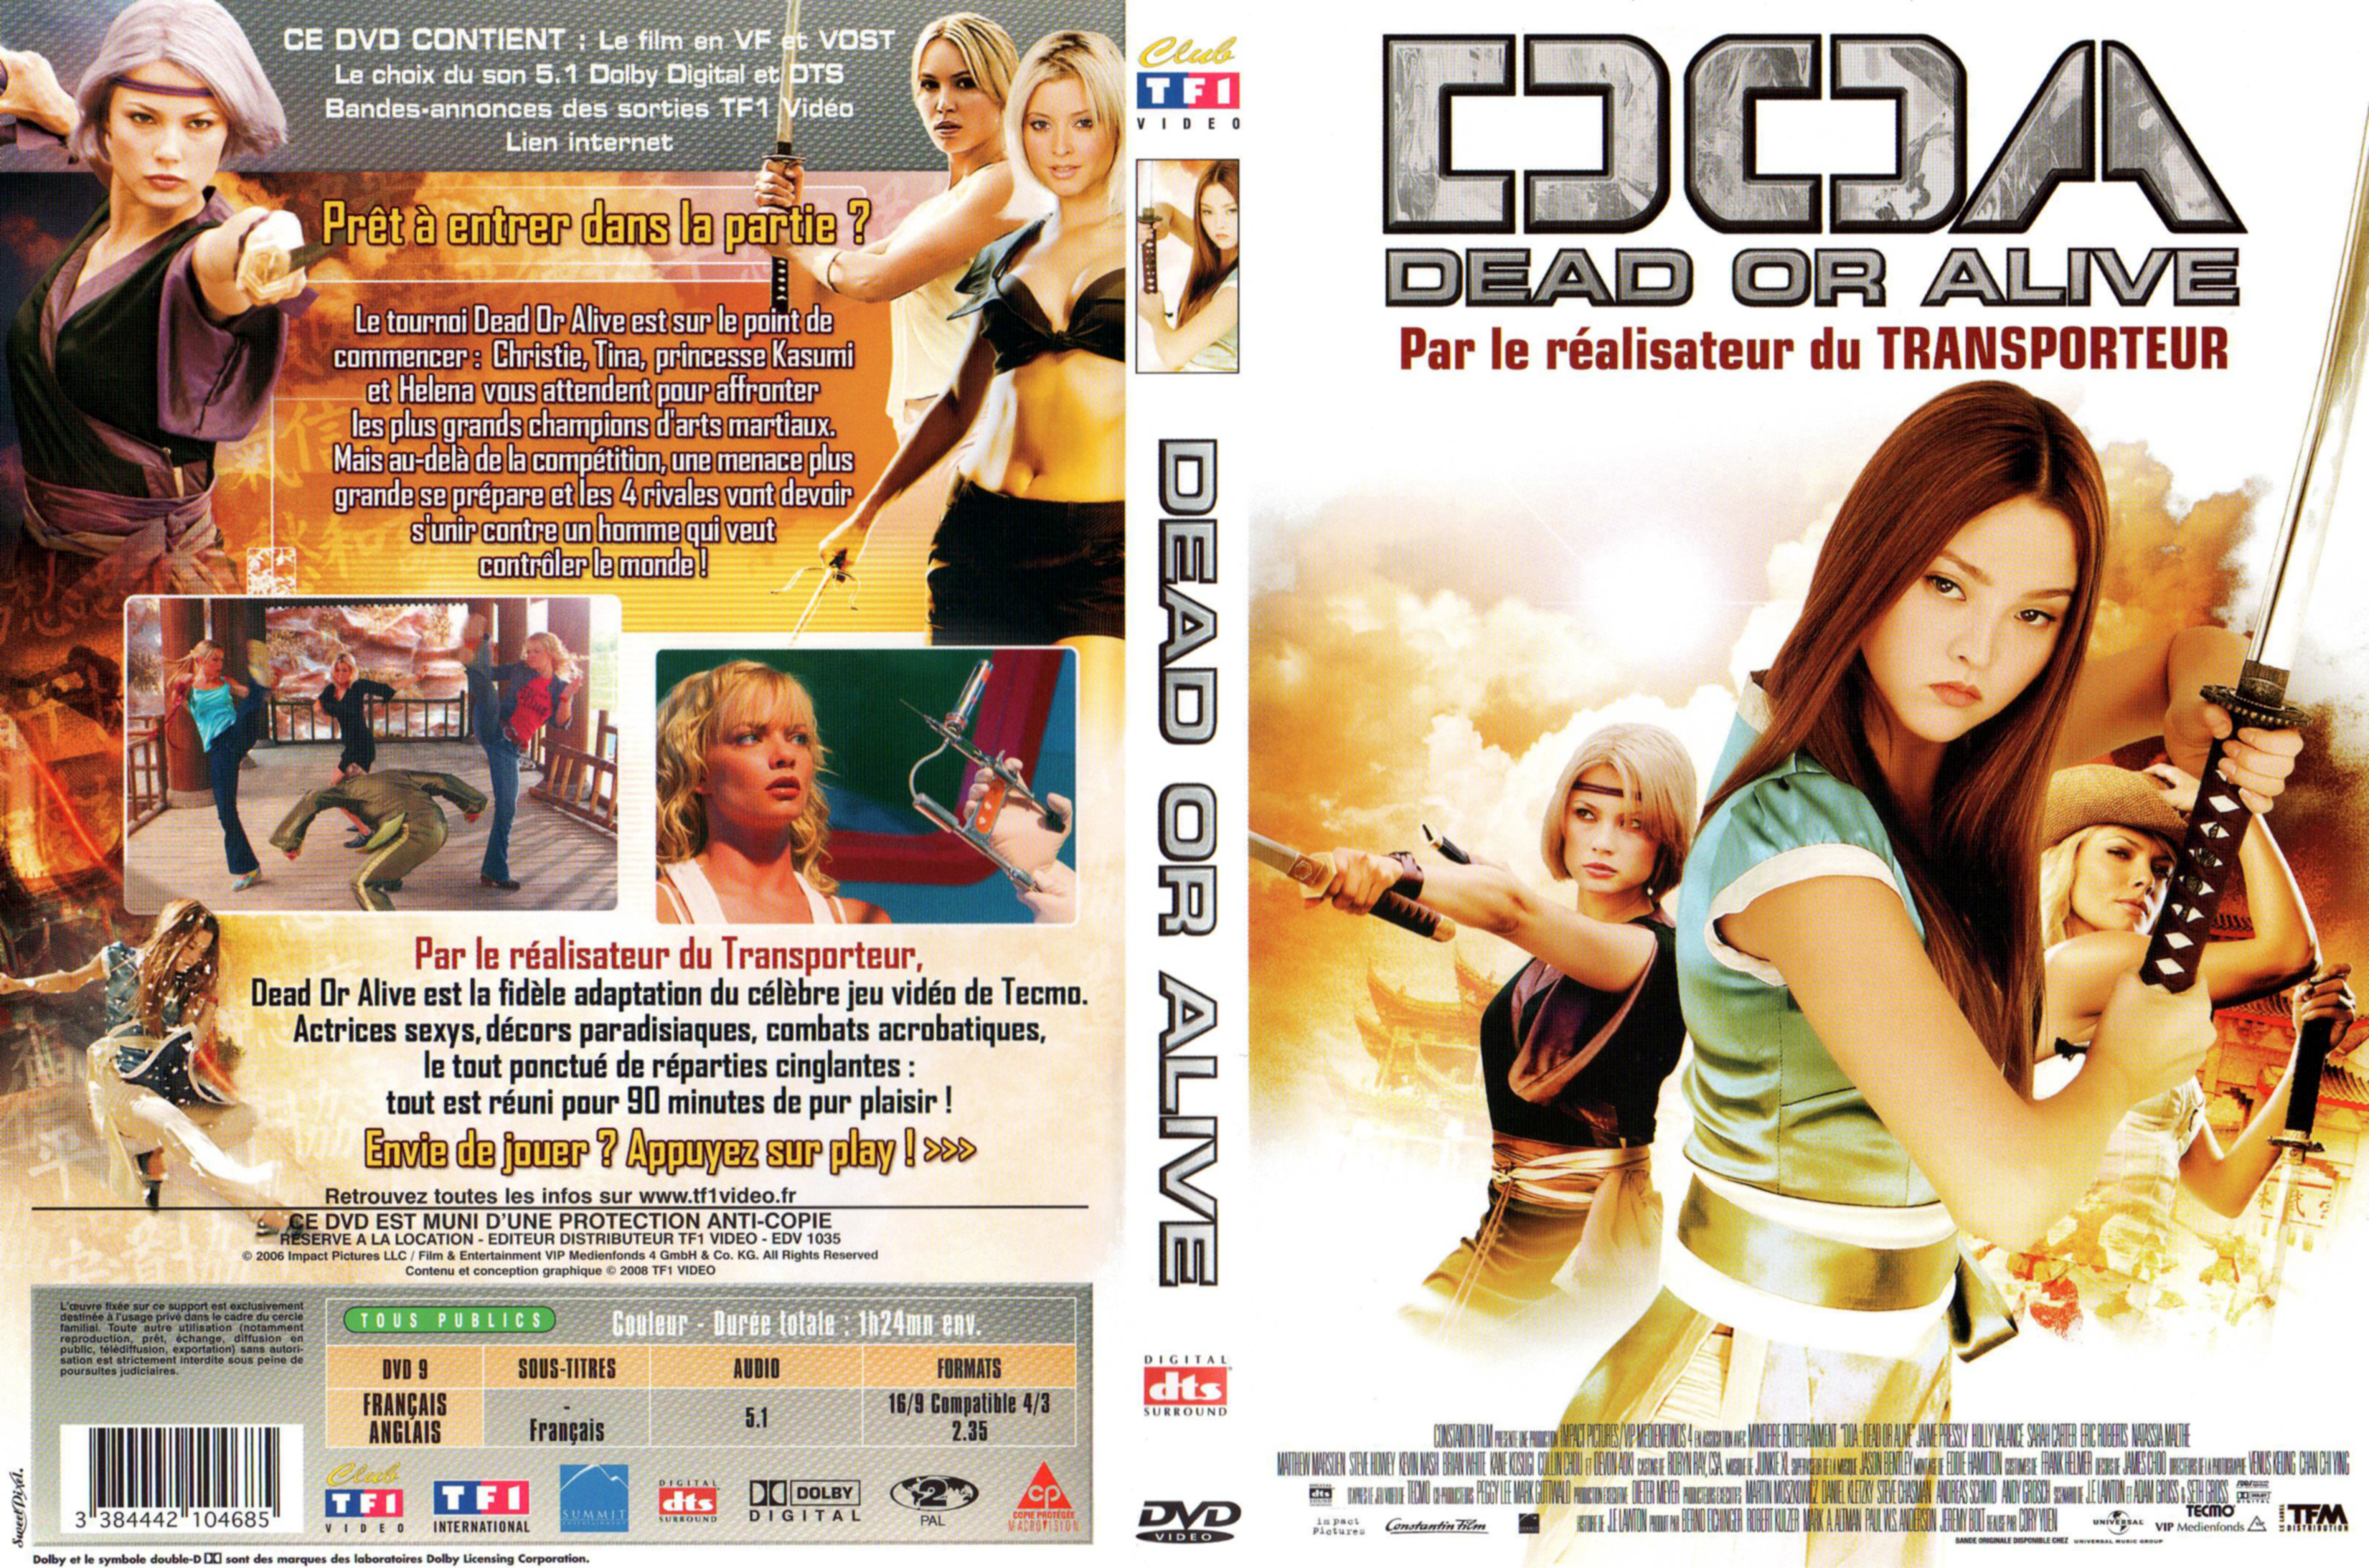 Jaquette DVD Dead or alive (2007)